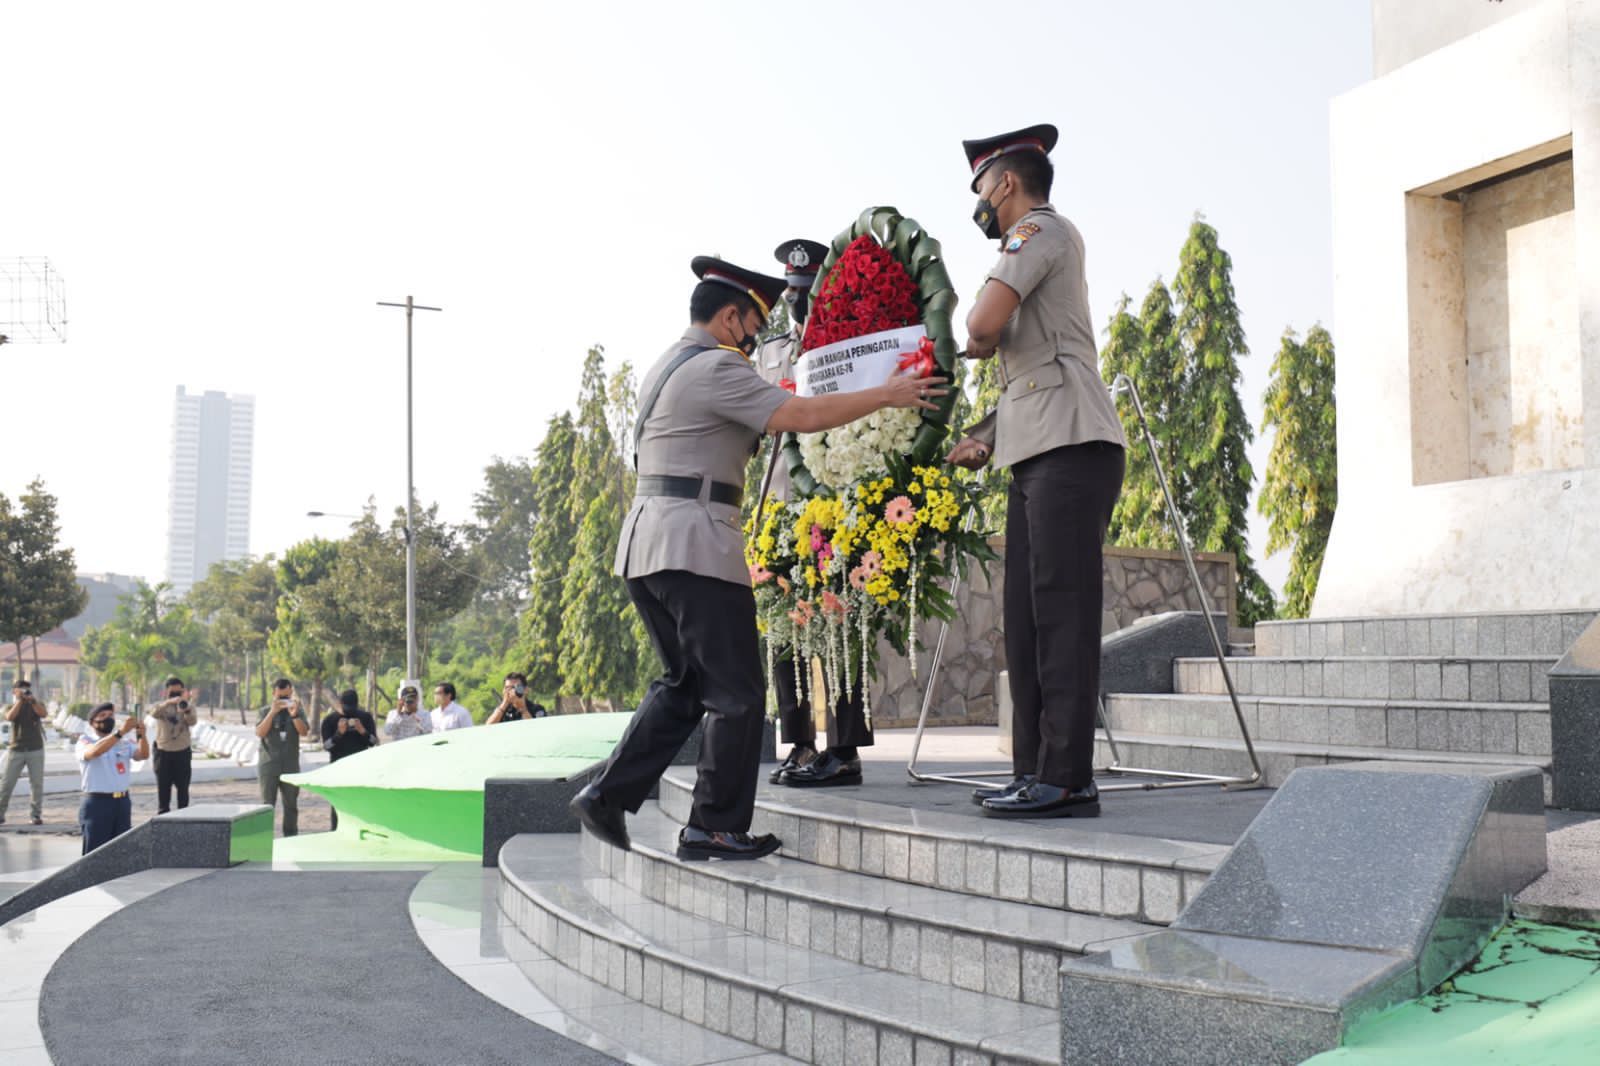 Ziarah Makam Pahlawan dalam rangka Hari Bhayangkara, Kapolda Jatim Sempatkan Berdoa di Makam Sang Kakek yang merupakan Pejuang Kemerdekaan